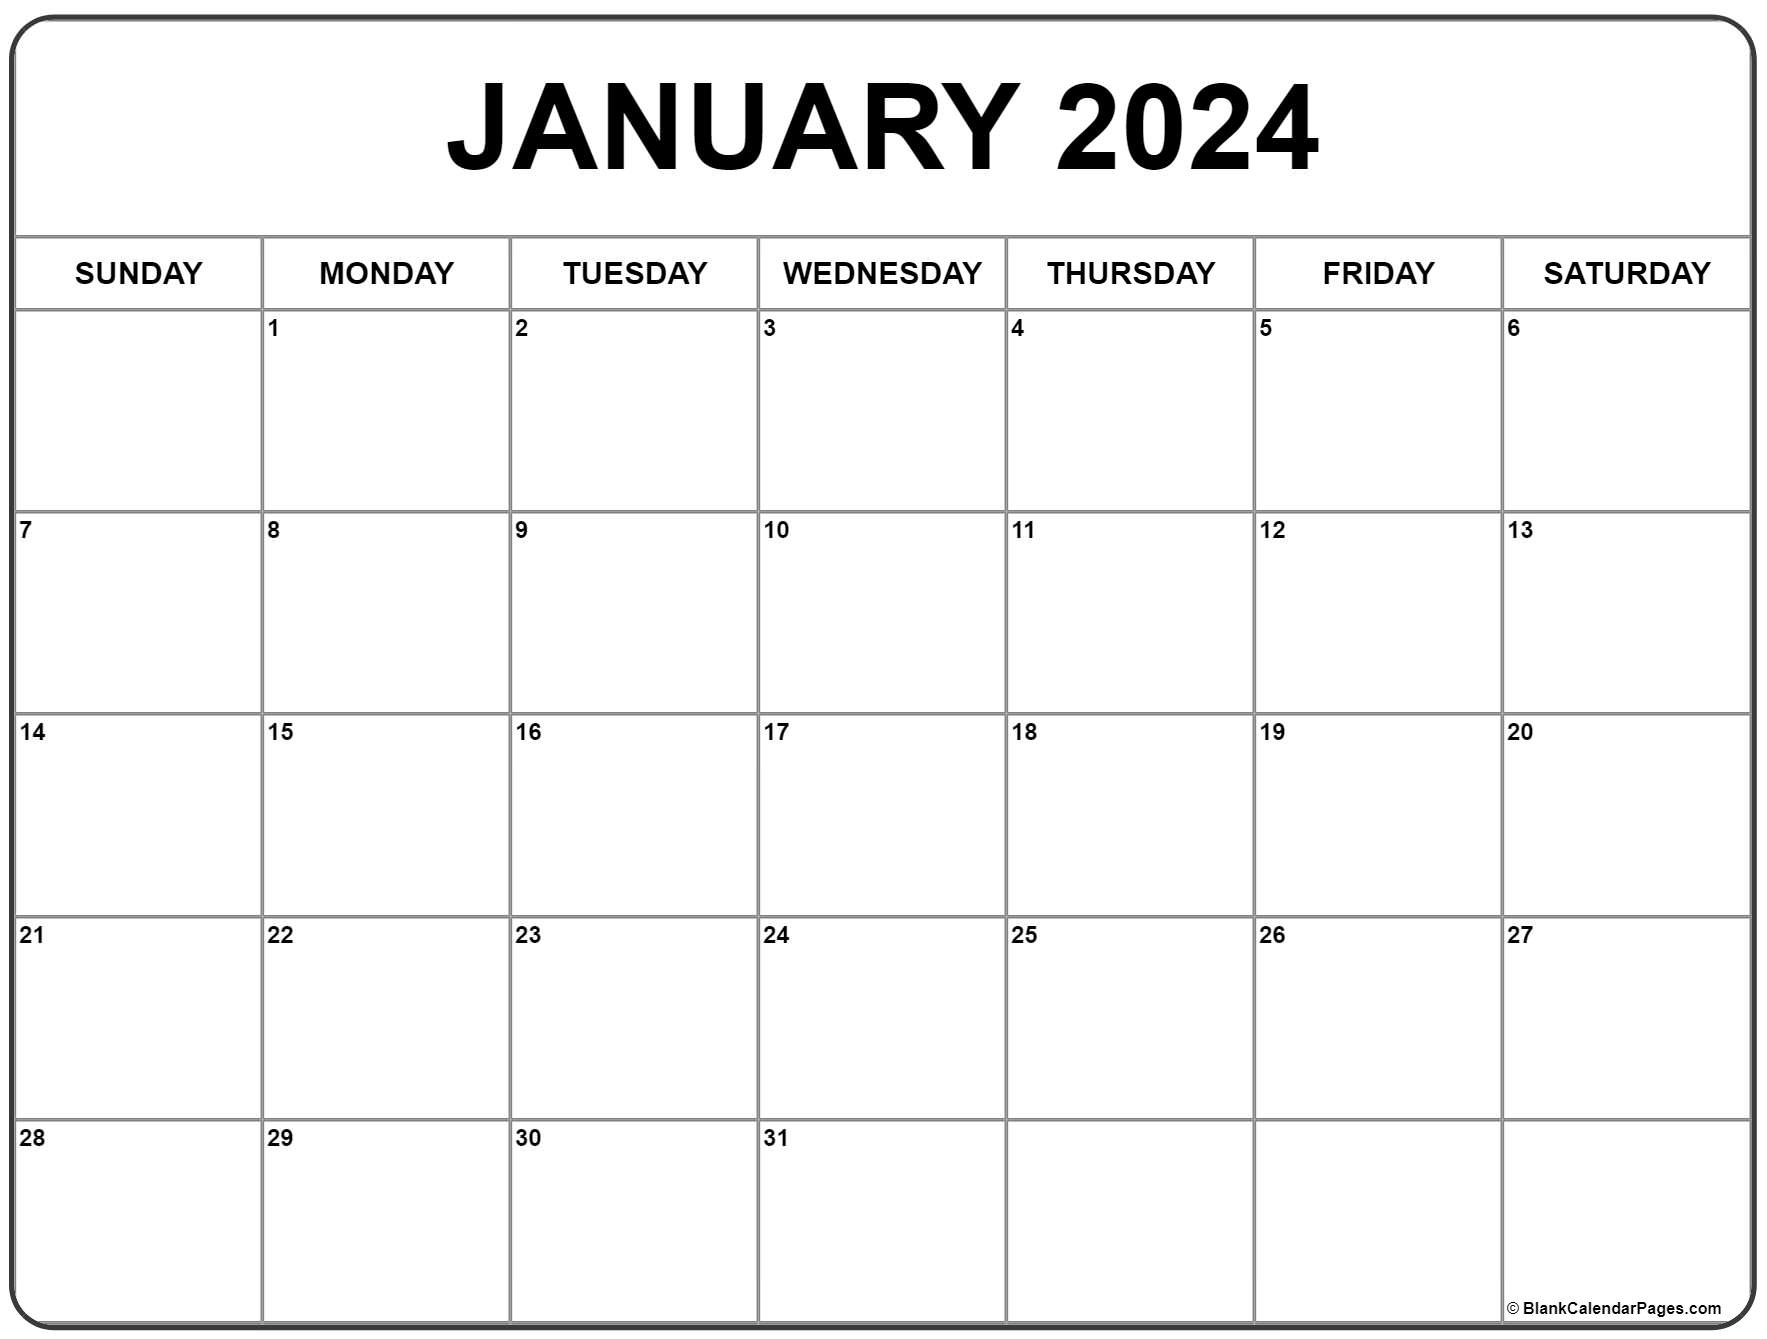 January 2024 Calendar | Free Printable Calendar for Free 2024 January Printable Calendar